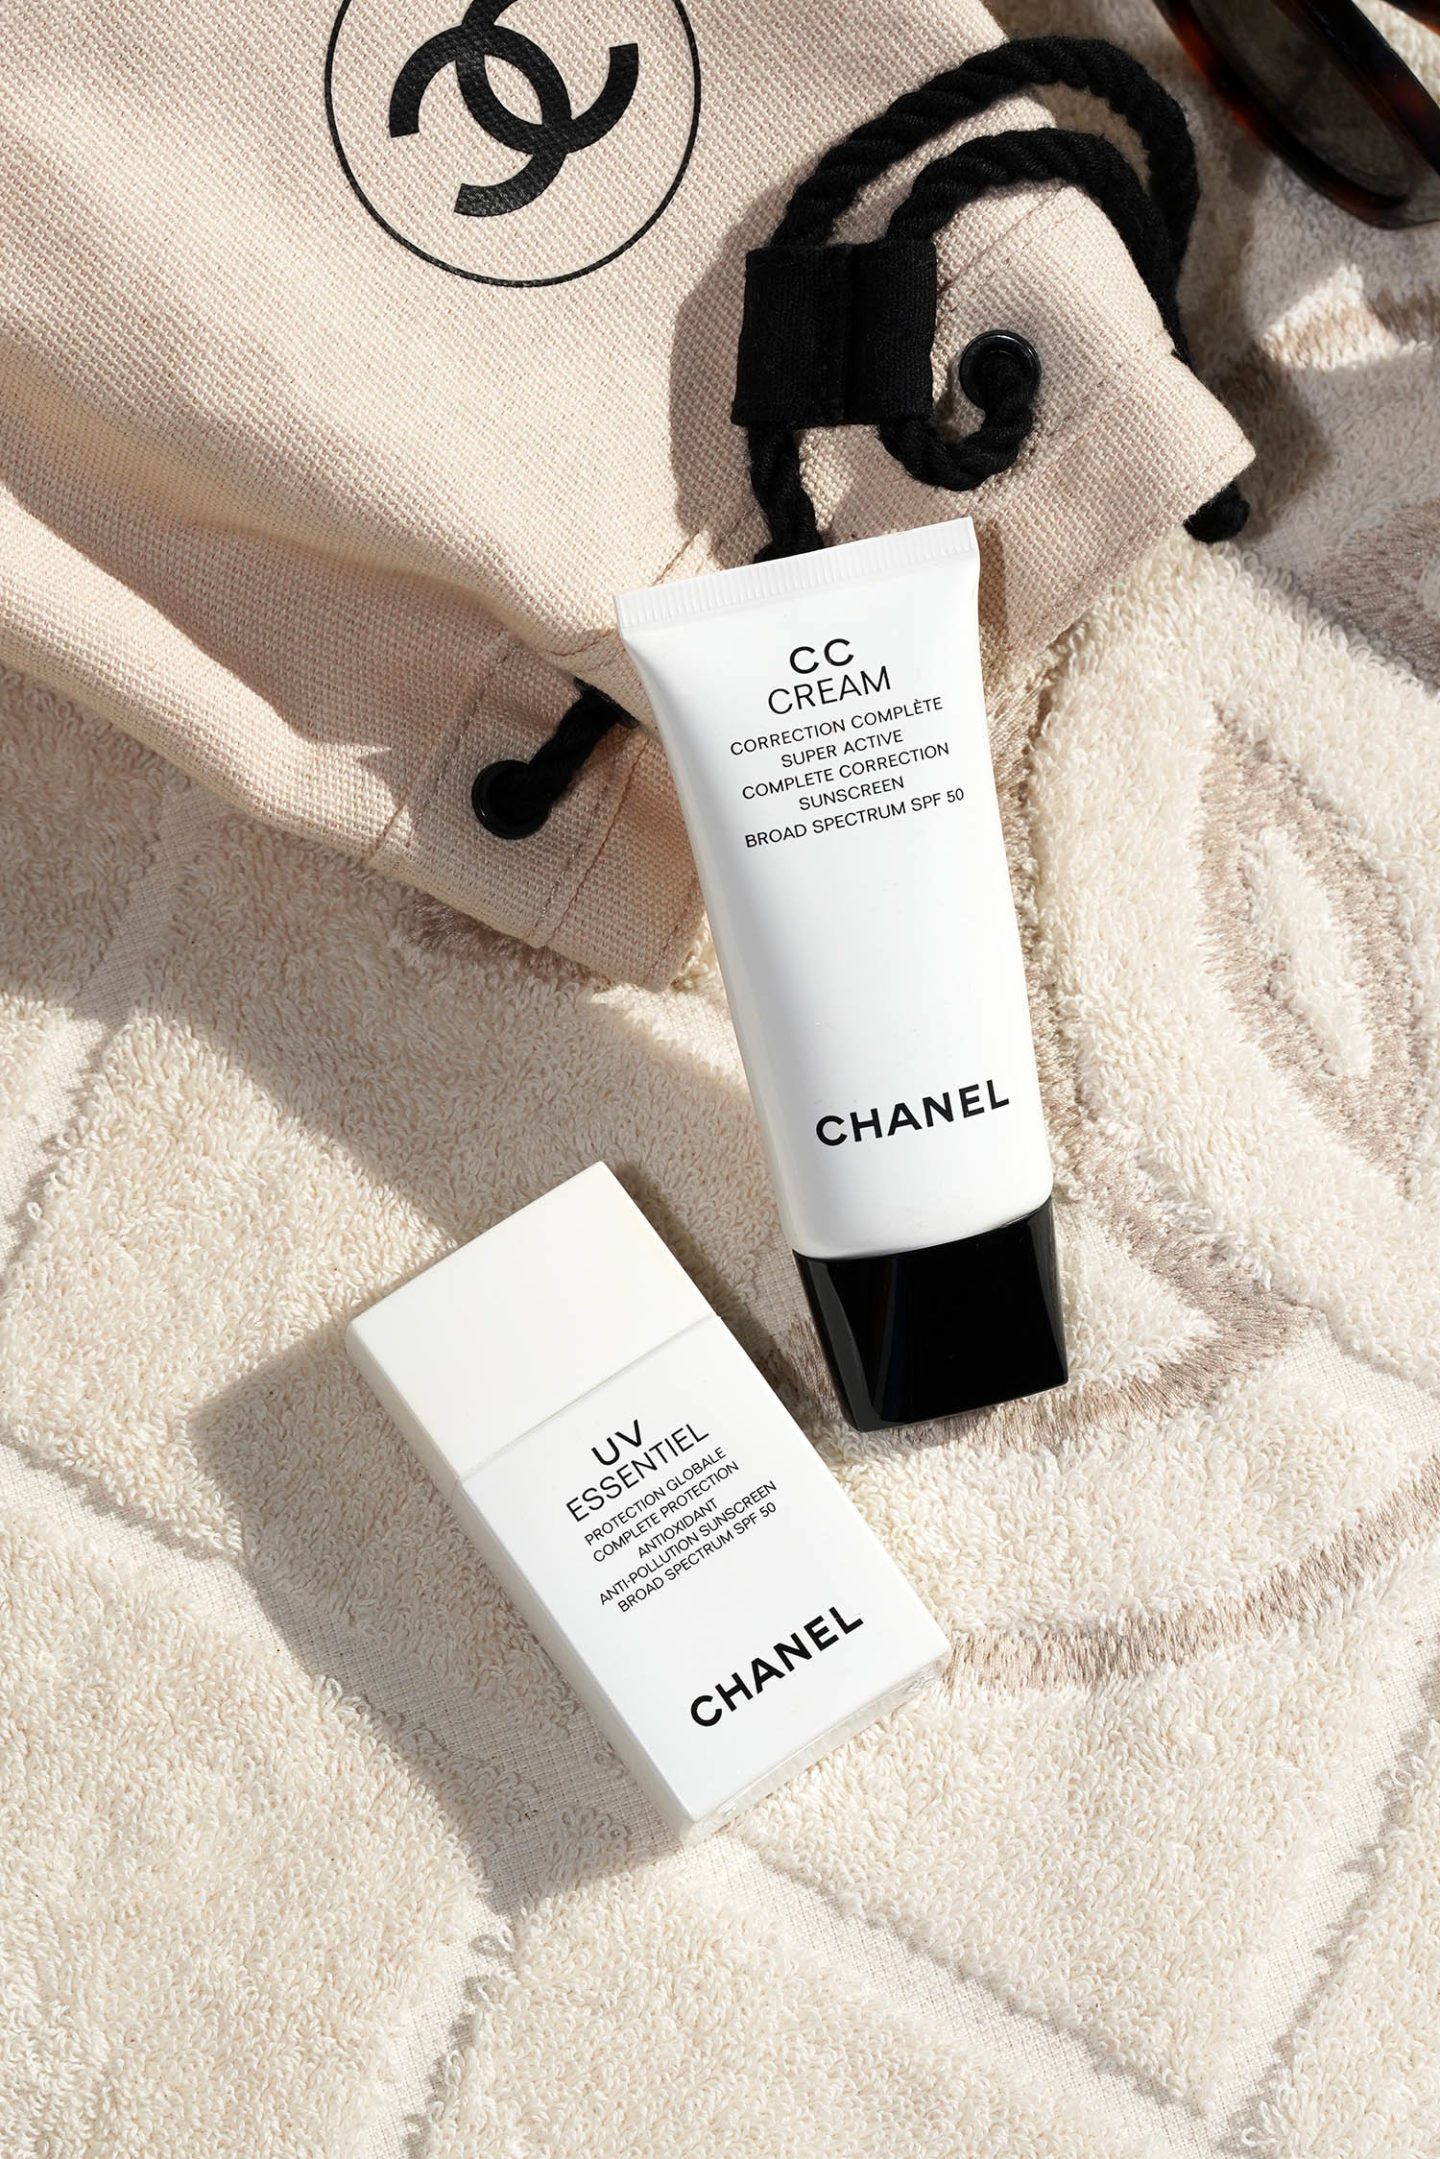 Chanel UV Essential a CC krém